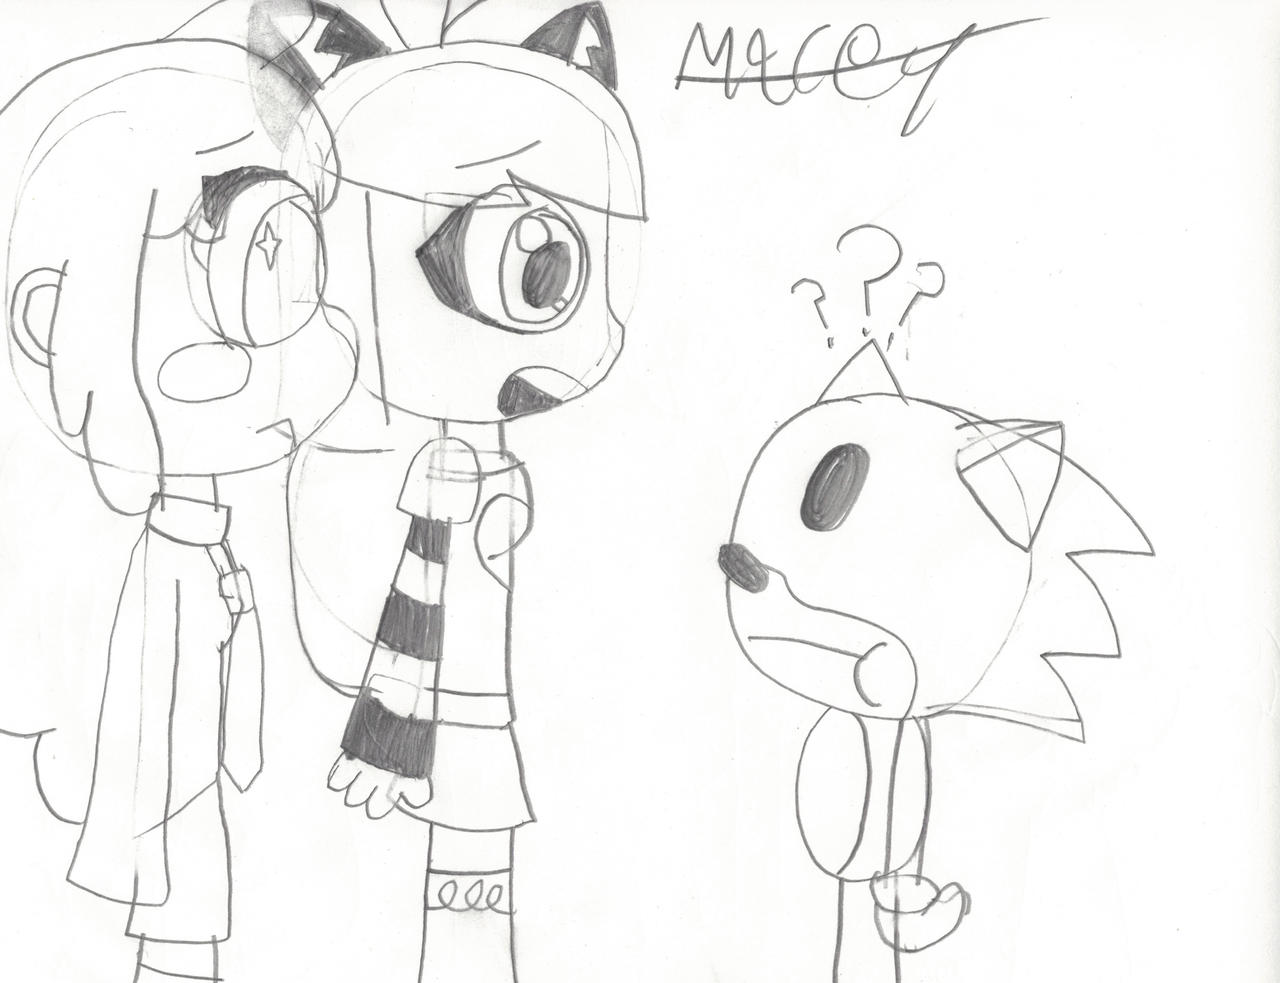 Some Sunky drawings I made : r/SonicTheHedgehog